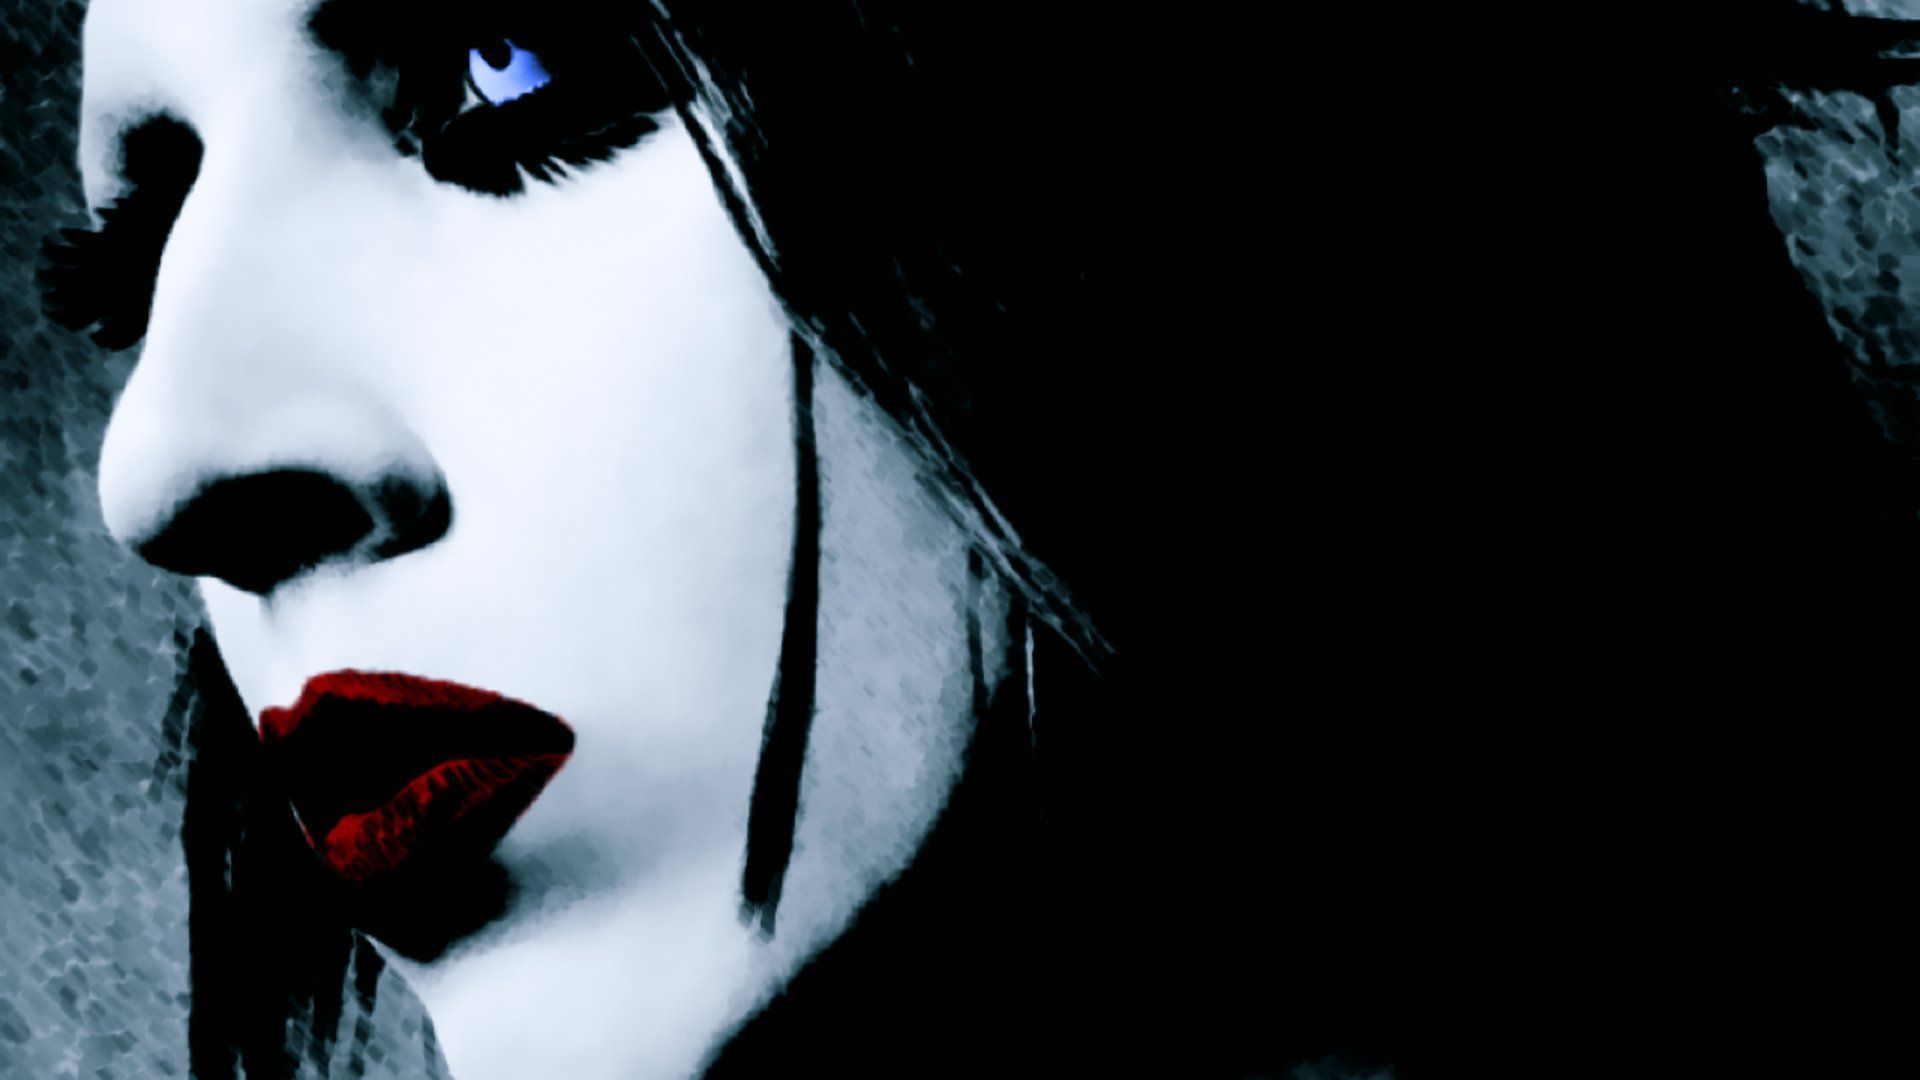 HD Quality Marilyn Manson Wallpaper Widescreen 9 Music Celebrity